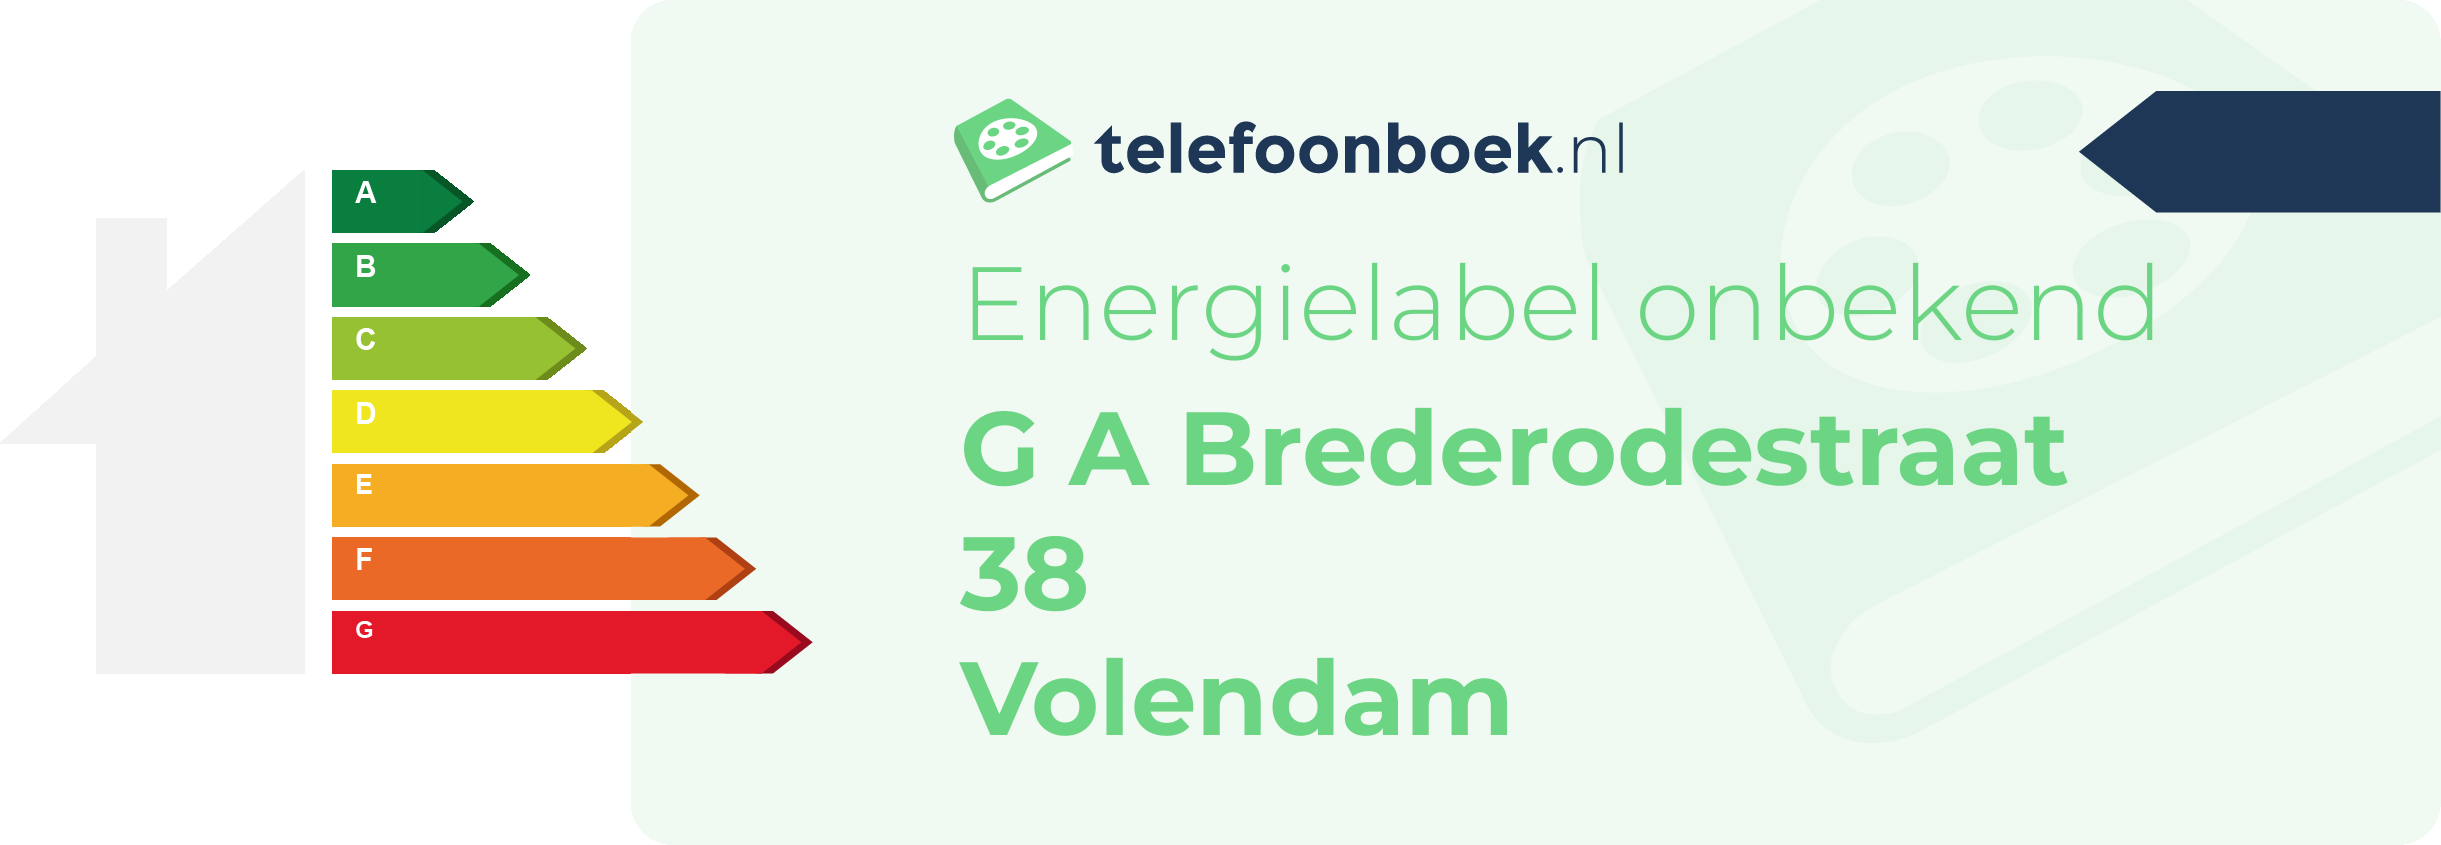 Energielabel G A Brederodestraat 38 Volendam